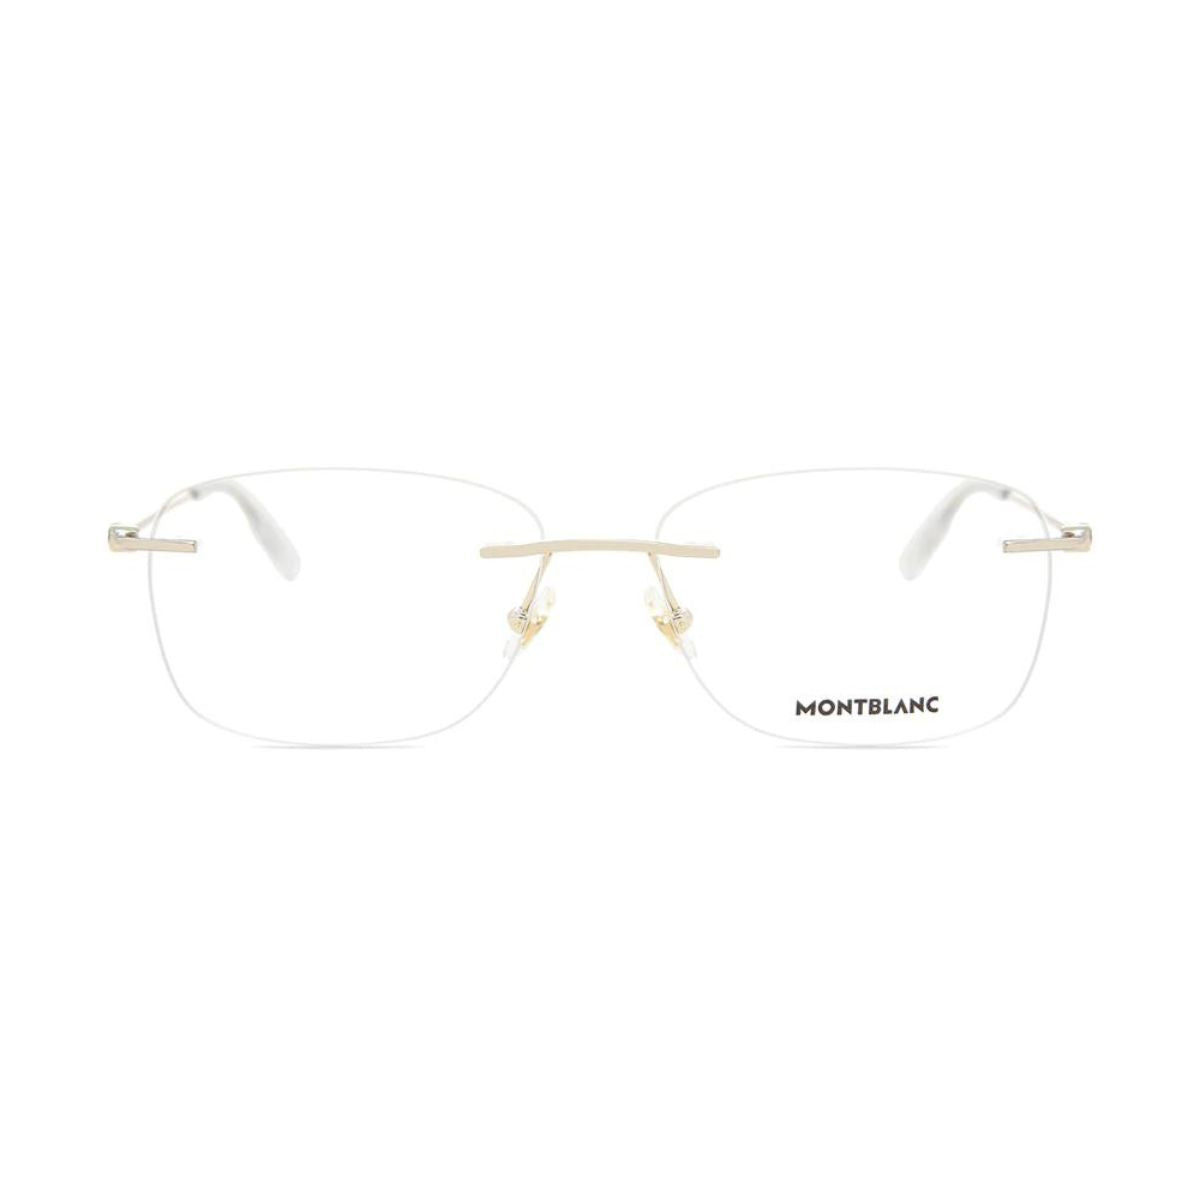 "Montblanc 0075O 002 trendy eyewear glasses frame for men's online at optorium"